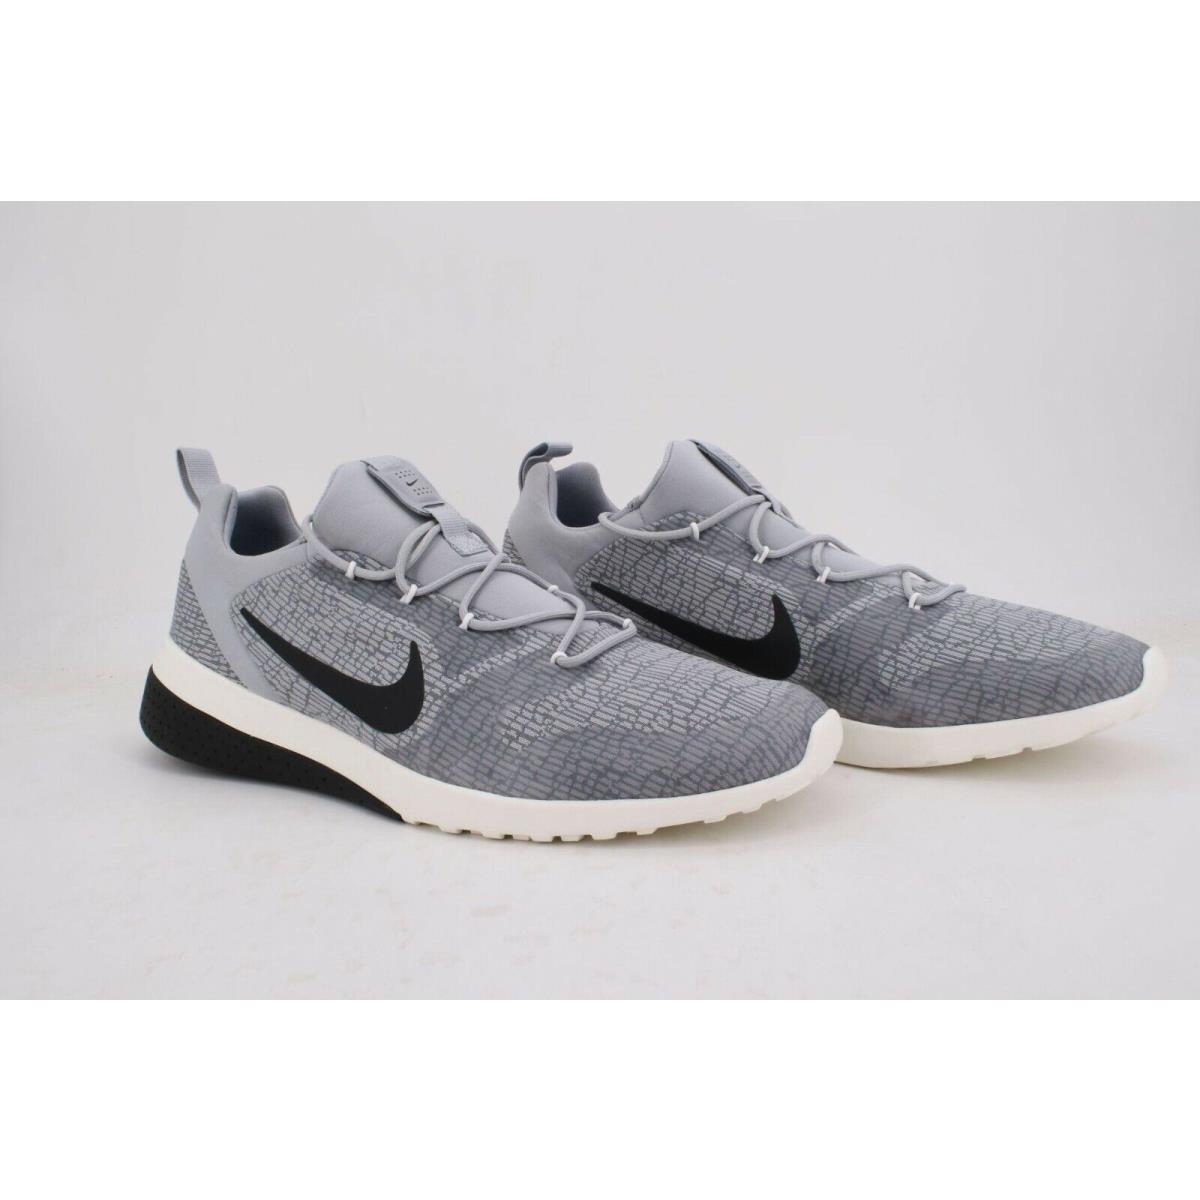 Nike CK Racer Men`s Running Shoes Size 11.5 Grey/black-wolf Grey-sail